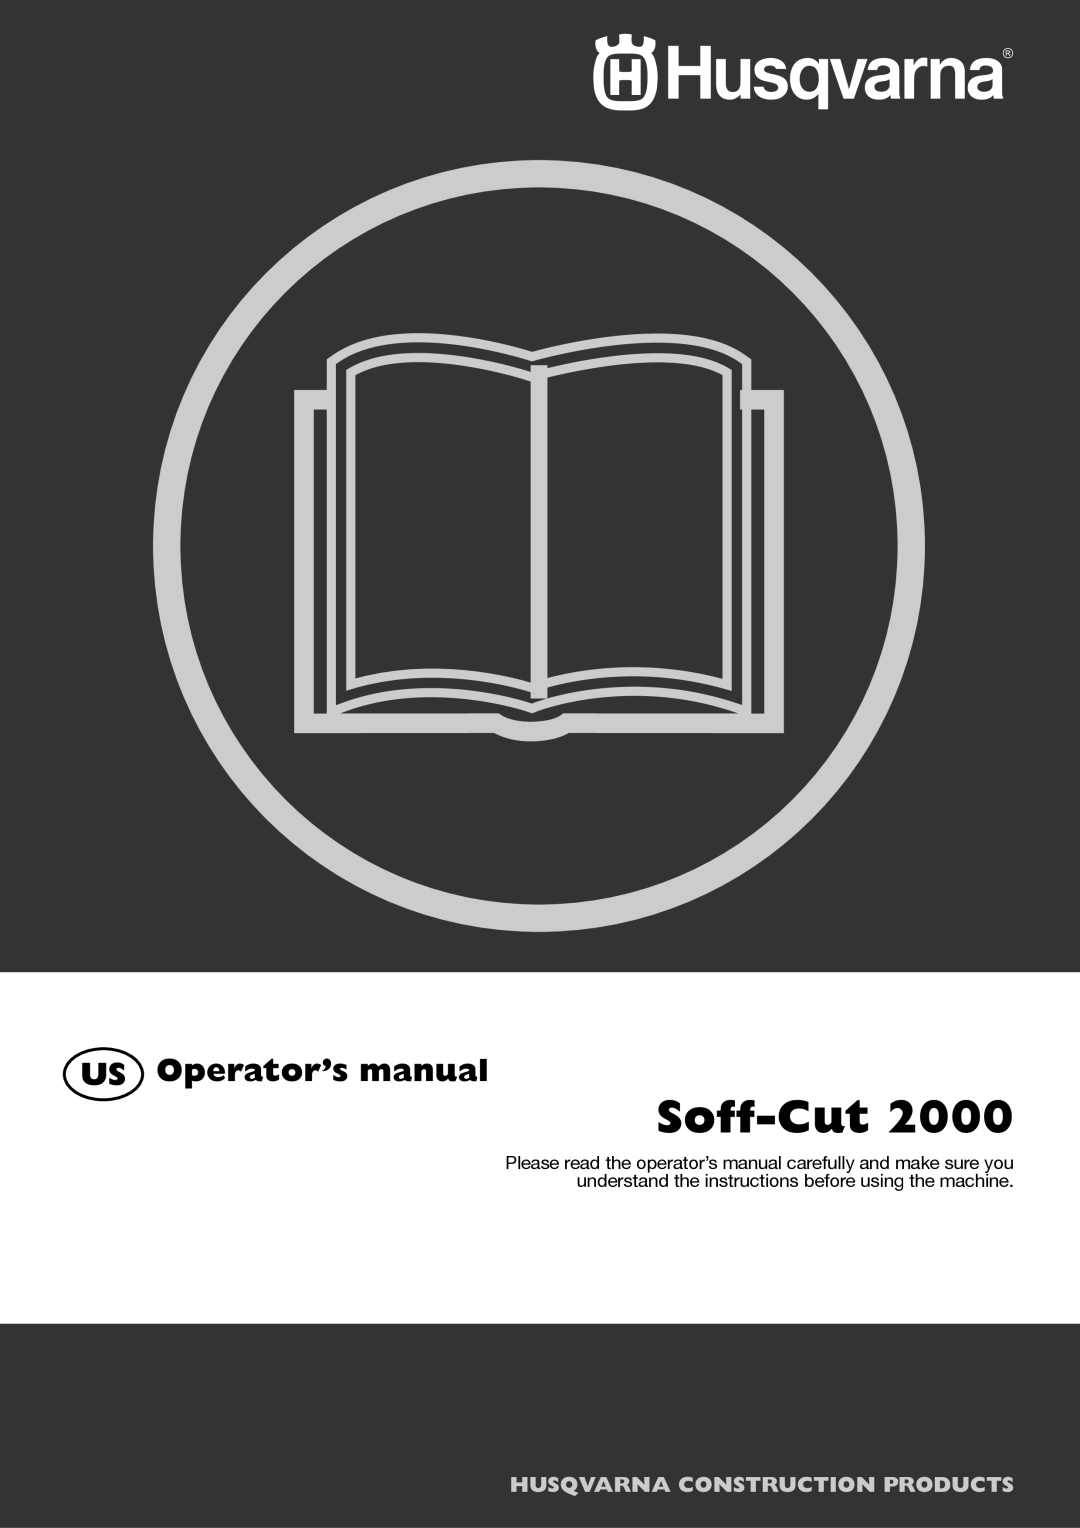 Husqvarna 2000 manual US Operator’s manual, Soff-Cut, Husqvarna Construction Products 